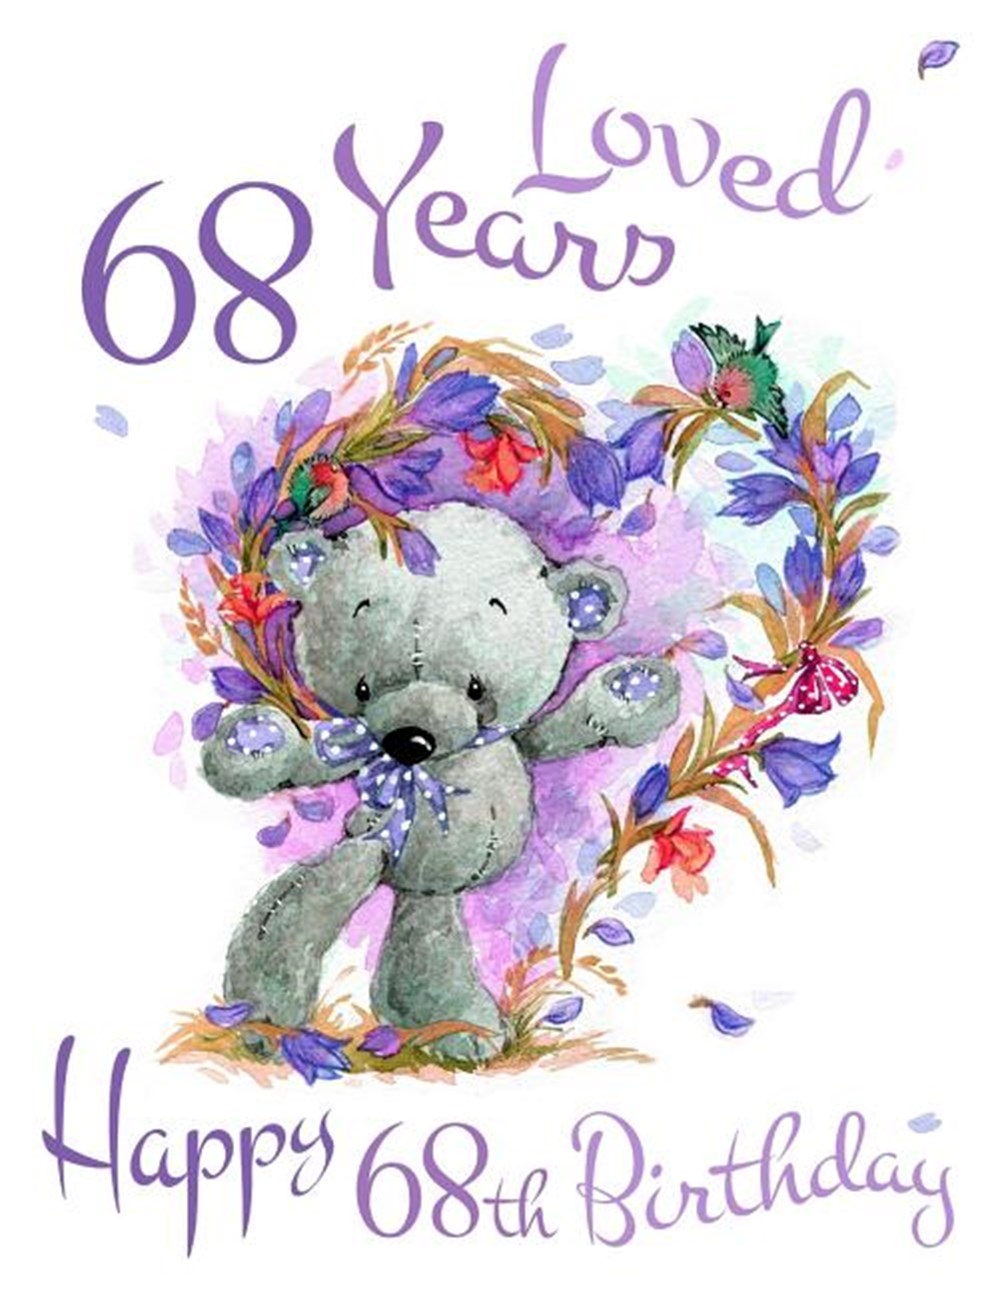 Happy 68th Birthday Large Print Address Book for Seniors Celebrating Their Birthday. Forget the Birt